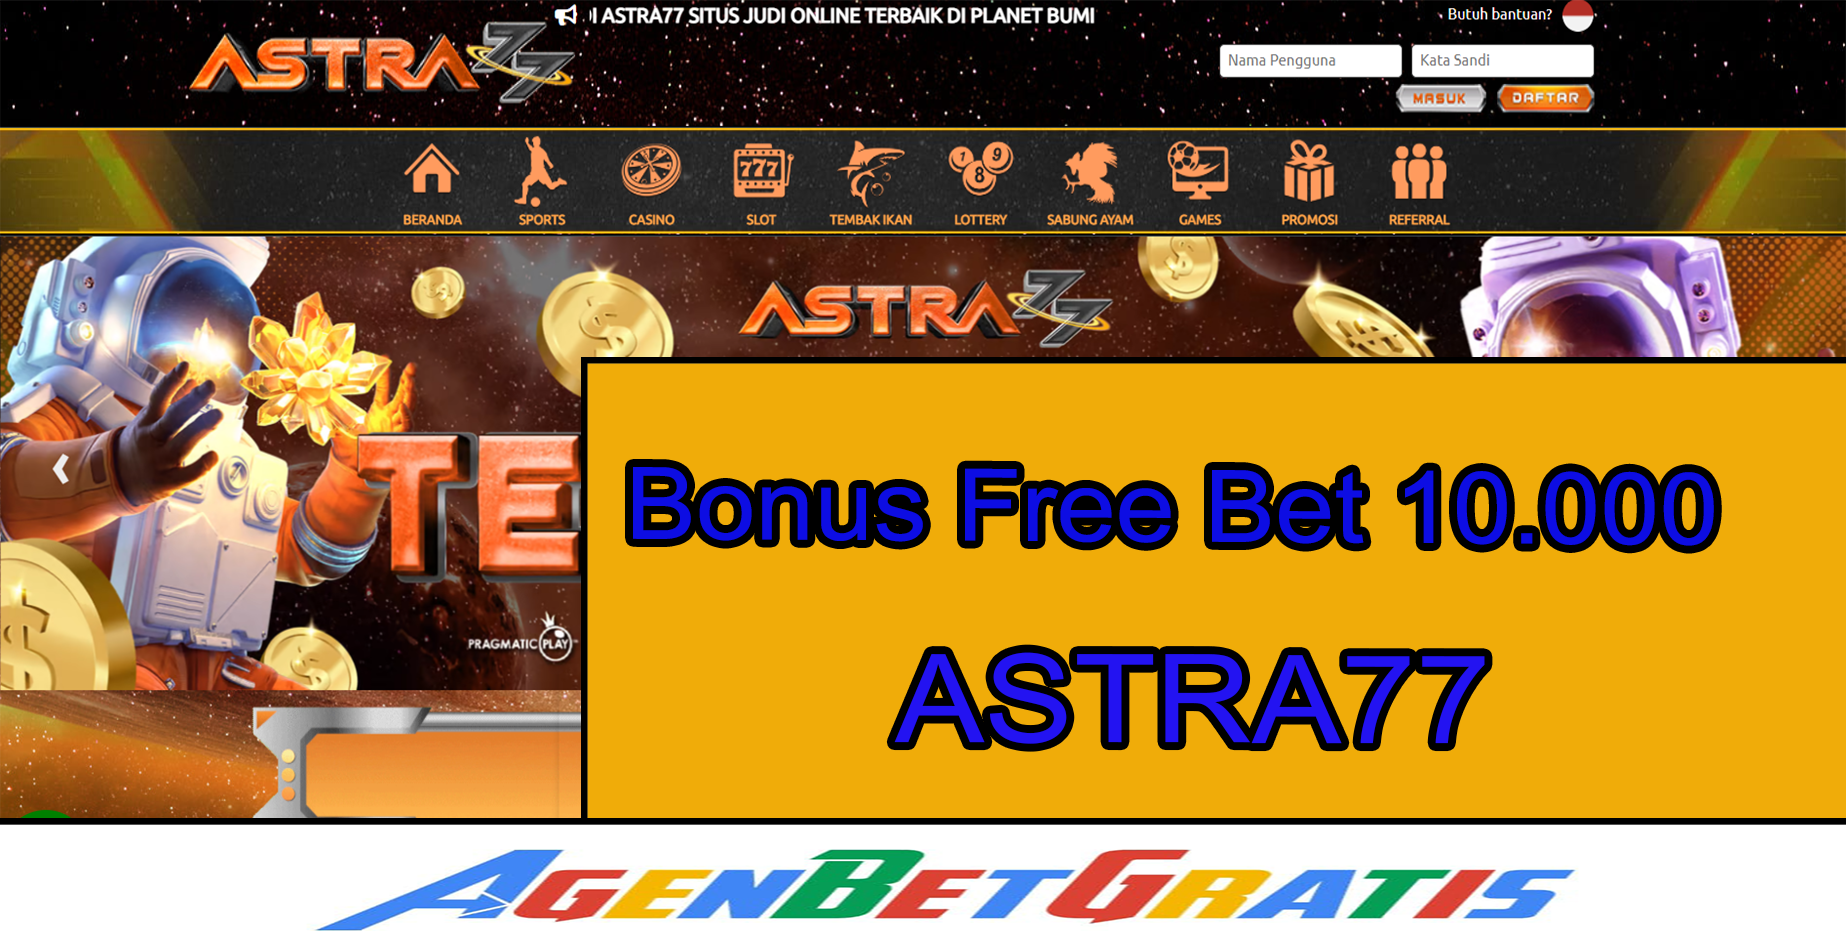 ASTRA77 - Bonus FreeBet 10.000